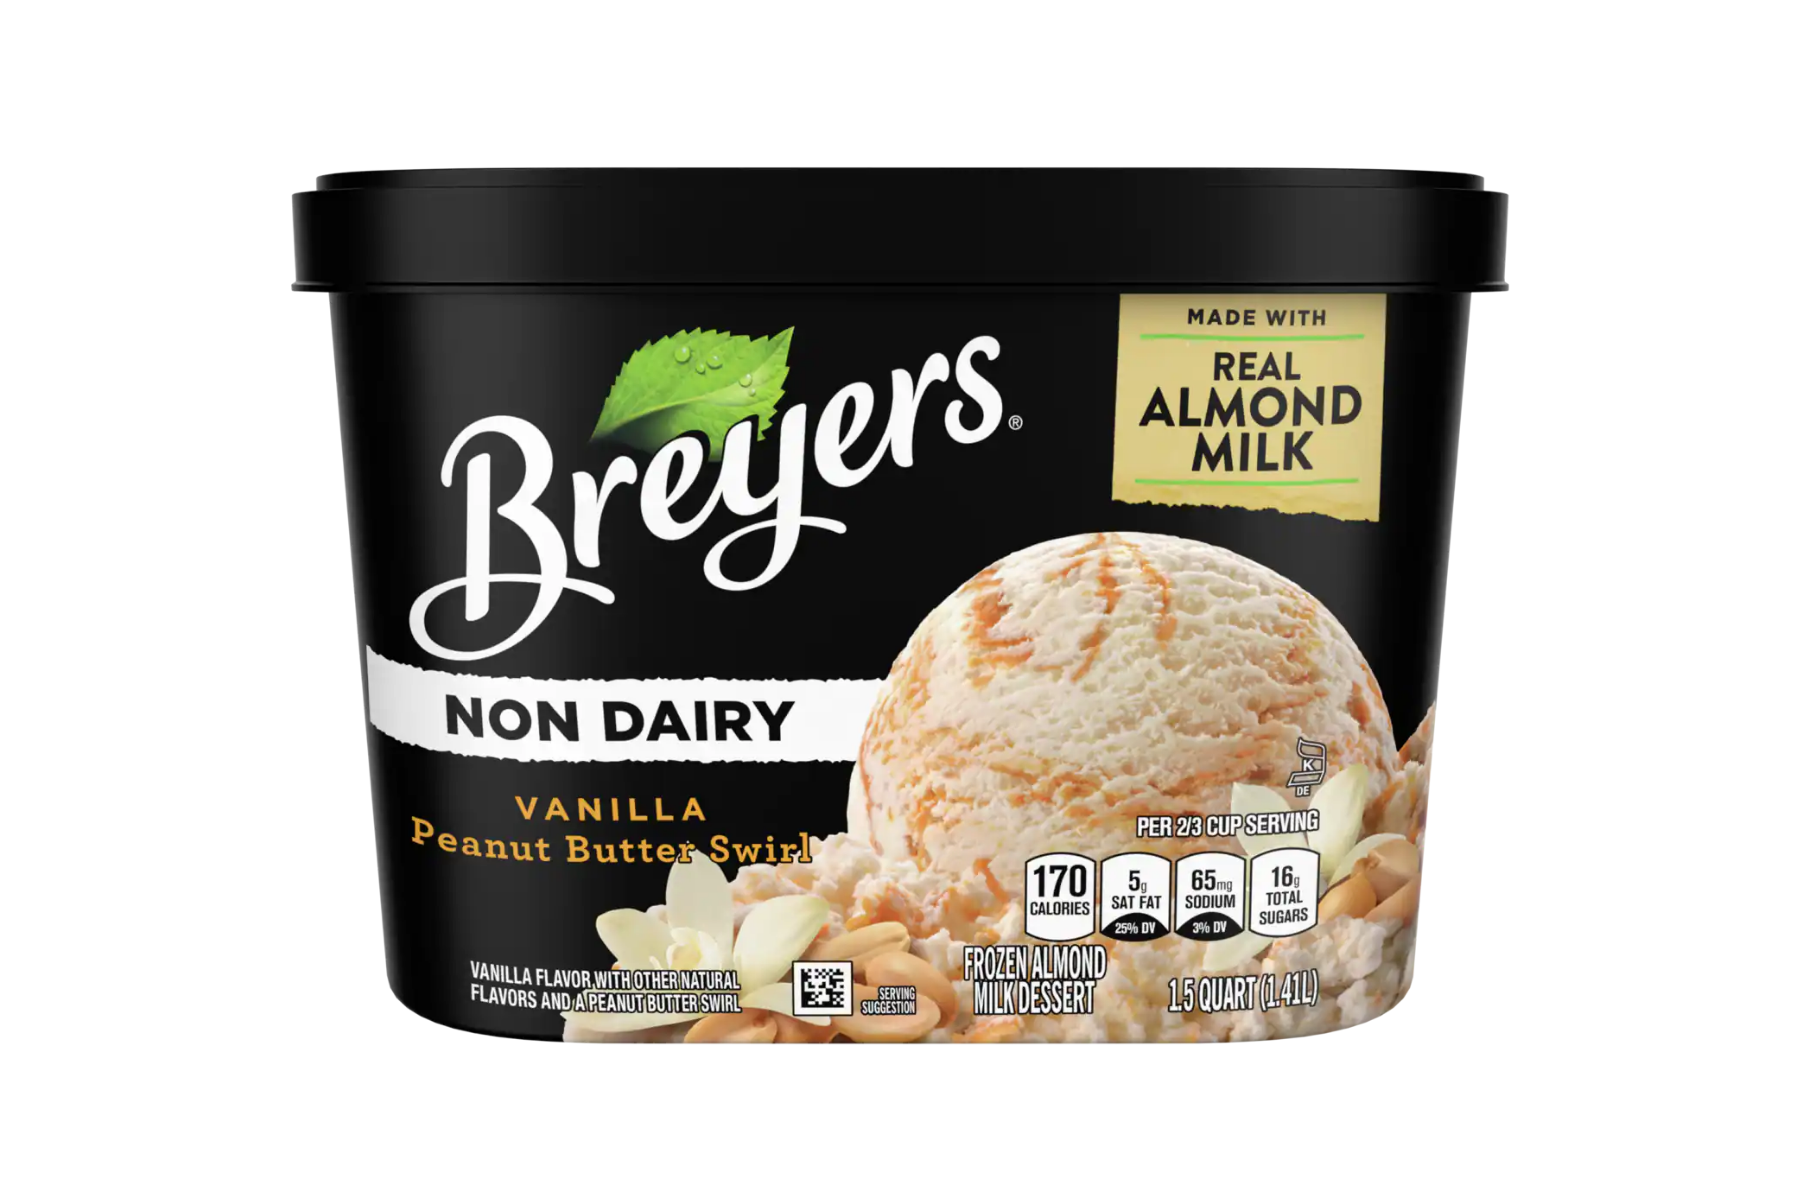 A carton of Breyers Non-Dairy Vanilla Peanut Butter Swirl ice cream made with real almond milk